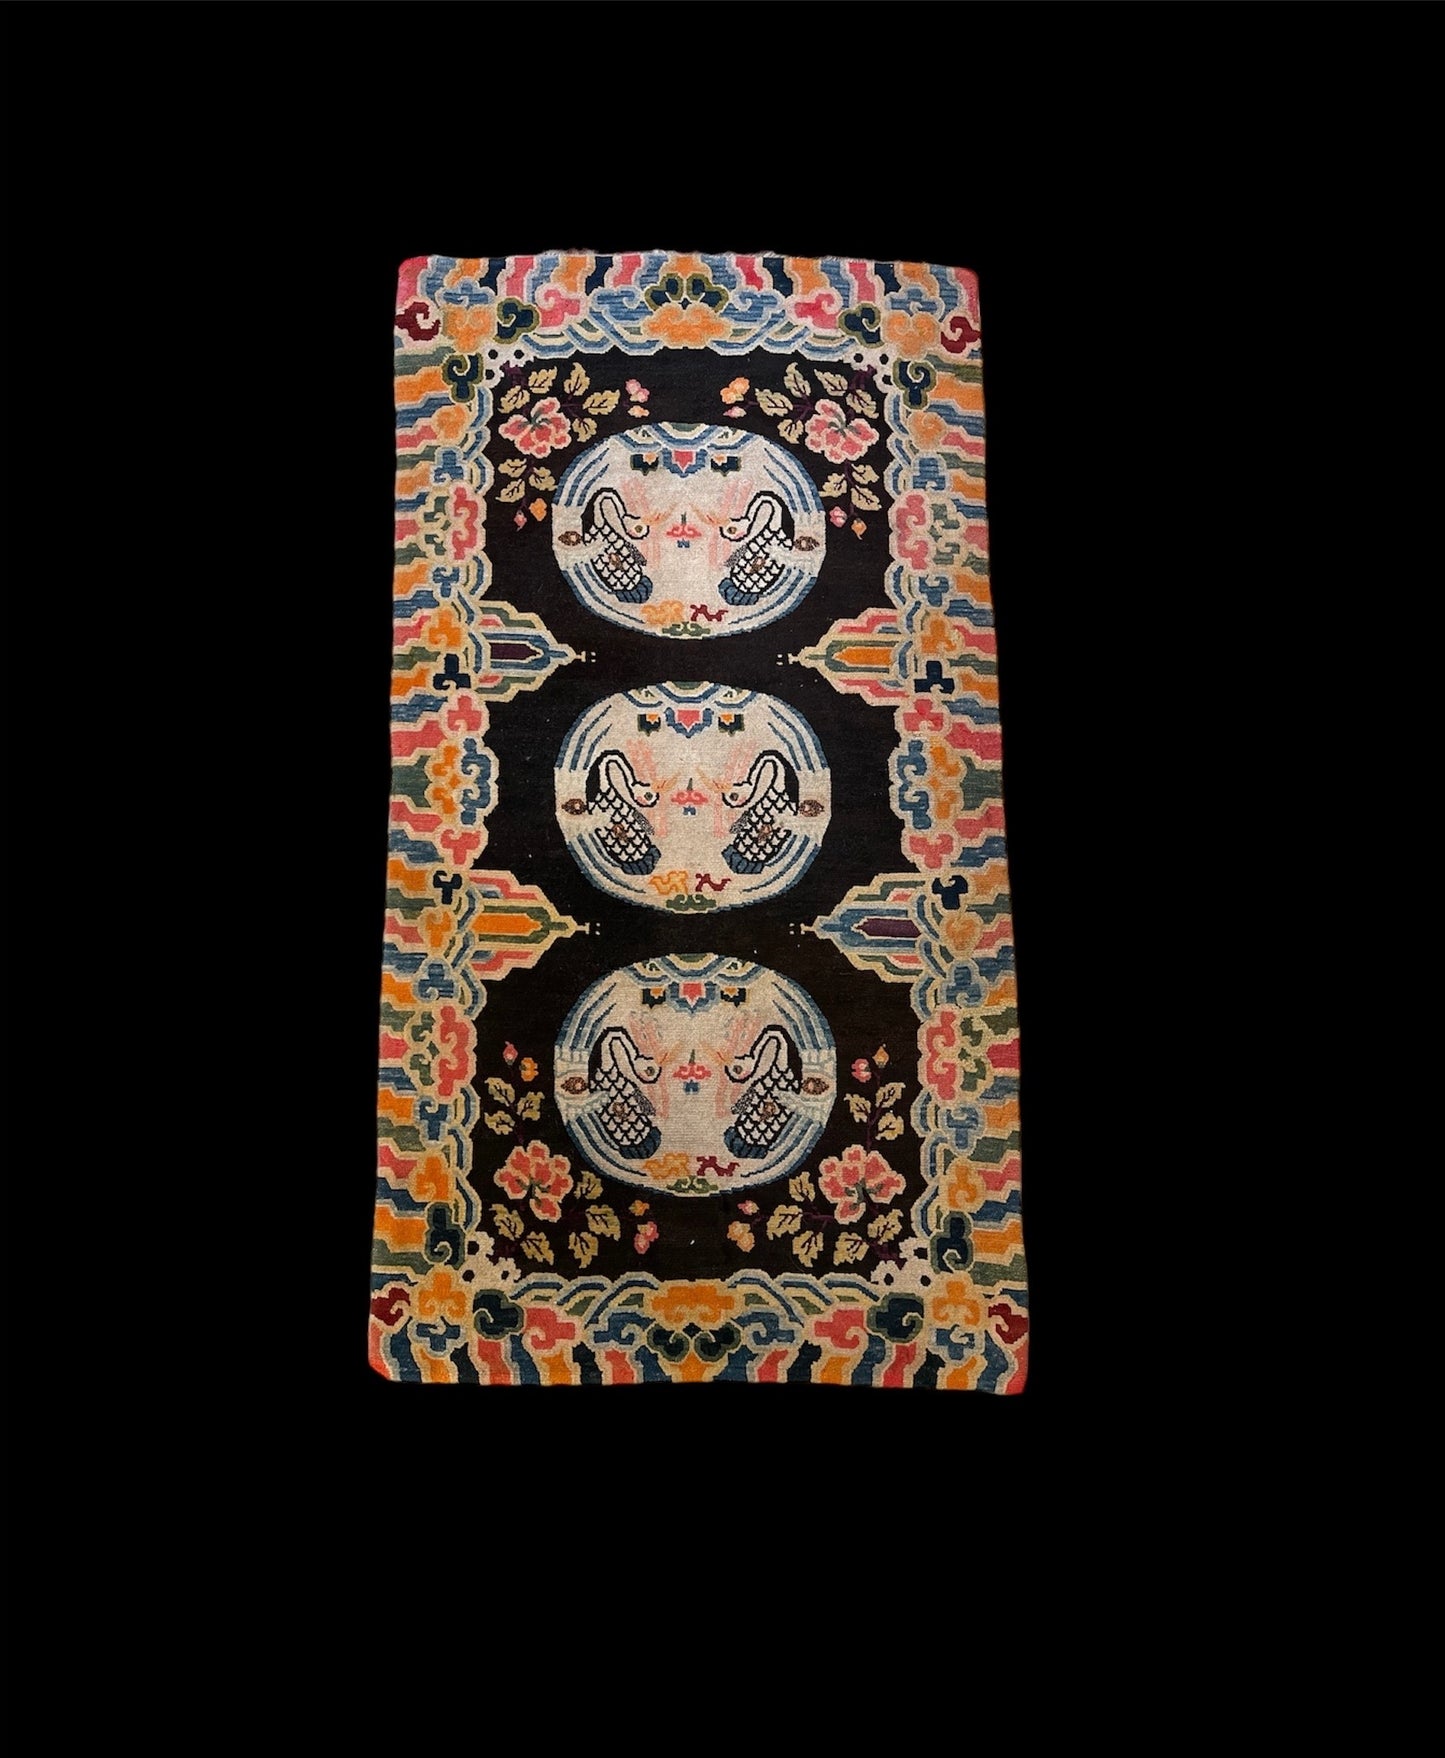 An antique early 20th c., Tibetan rug